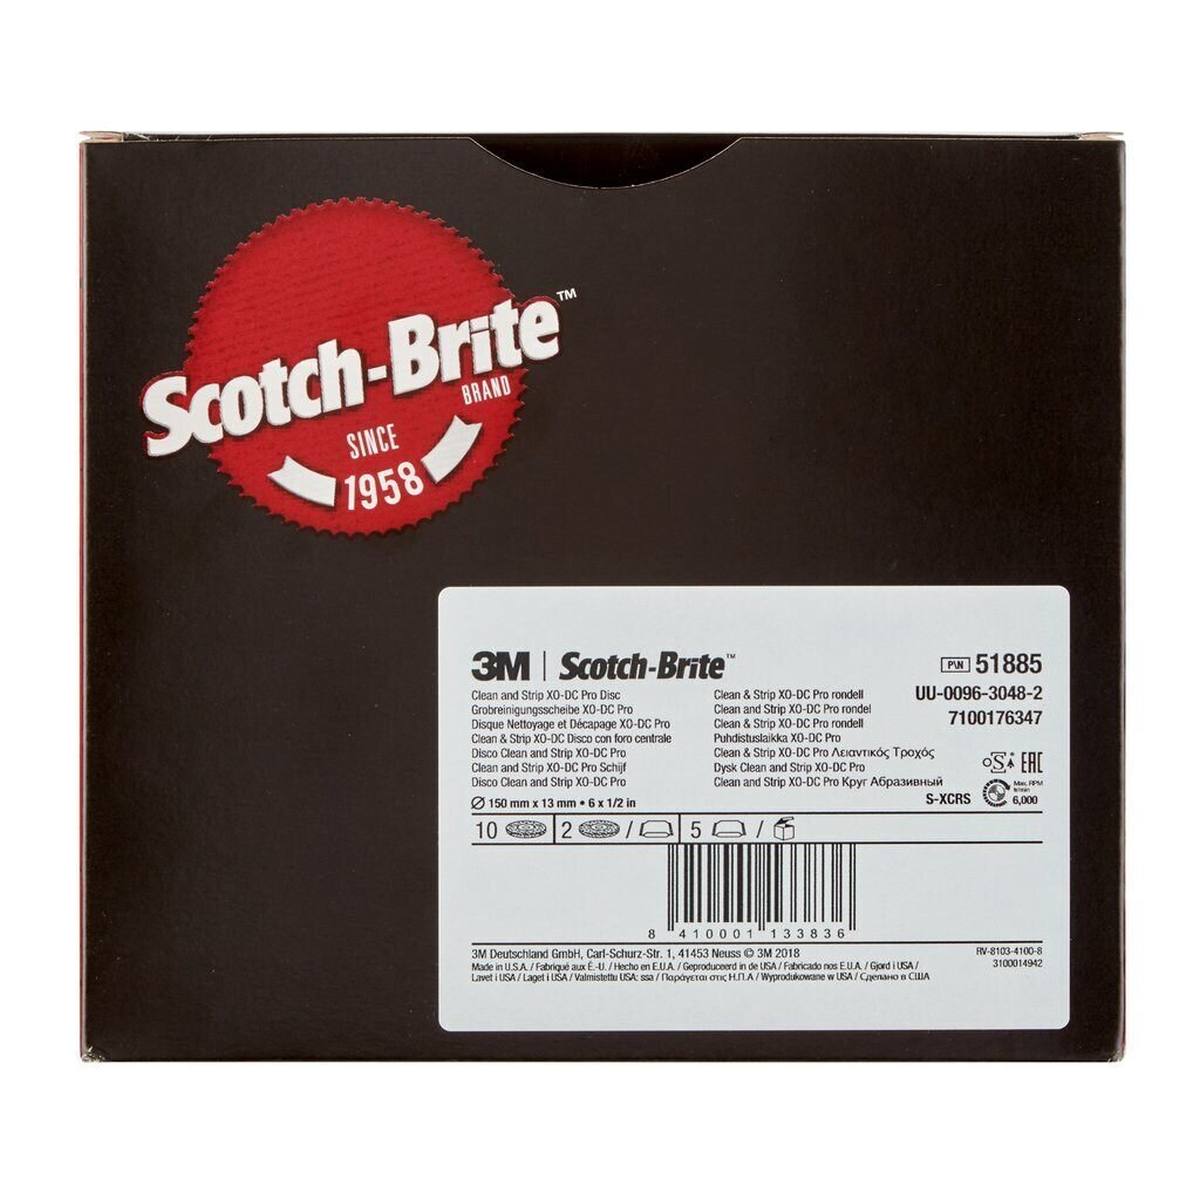 3M Scotch-Brite coarse cleaning disc XT-DC Pro, 150 mm x 13 mm, S, extra coarse